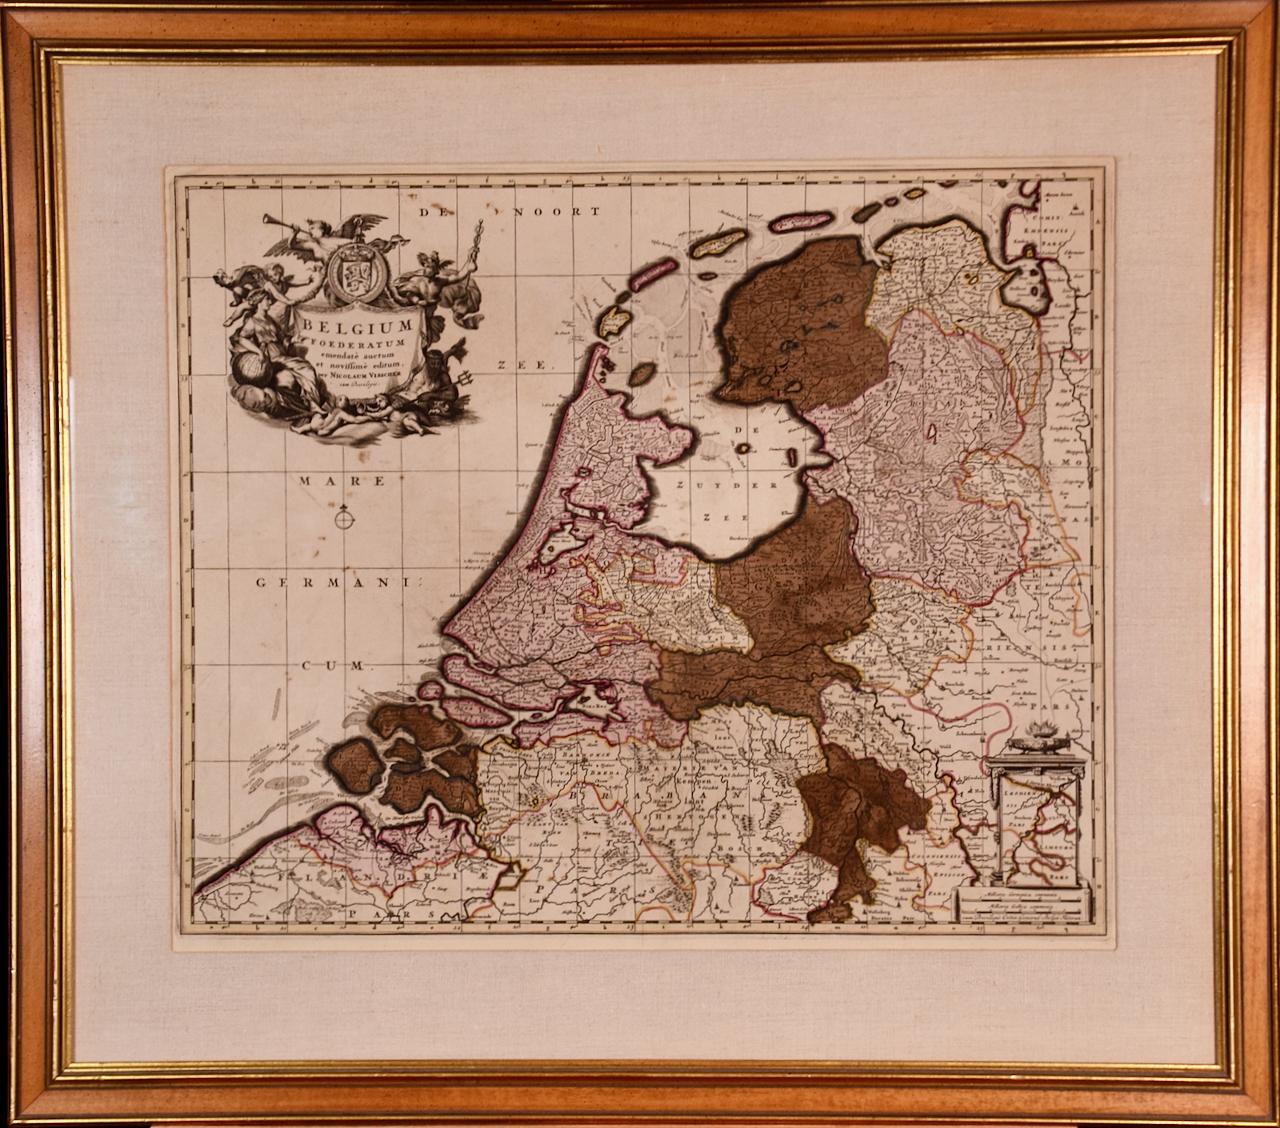 Nicolaus Visscher Print - Belgium and the Netherlands: A Hand-colored 17th Century Map by Visscher 